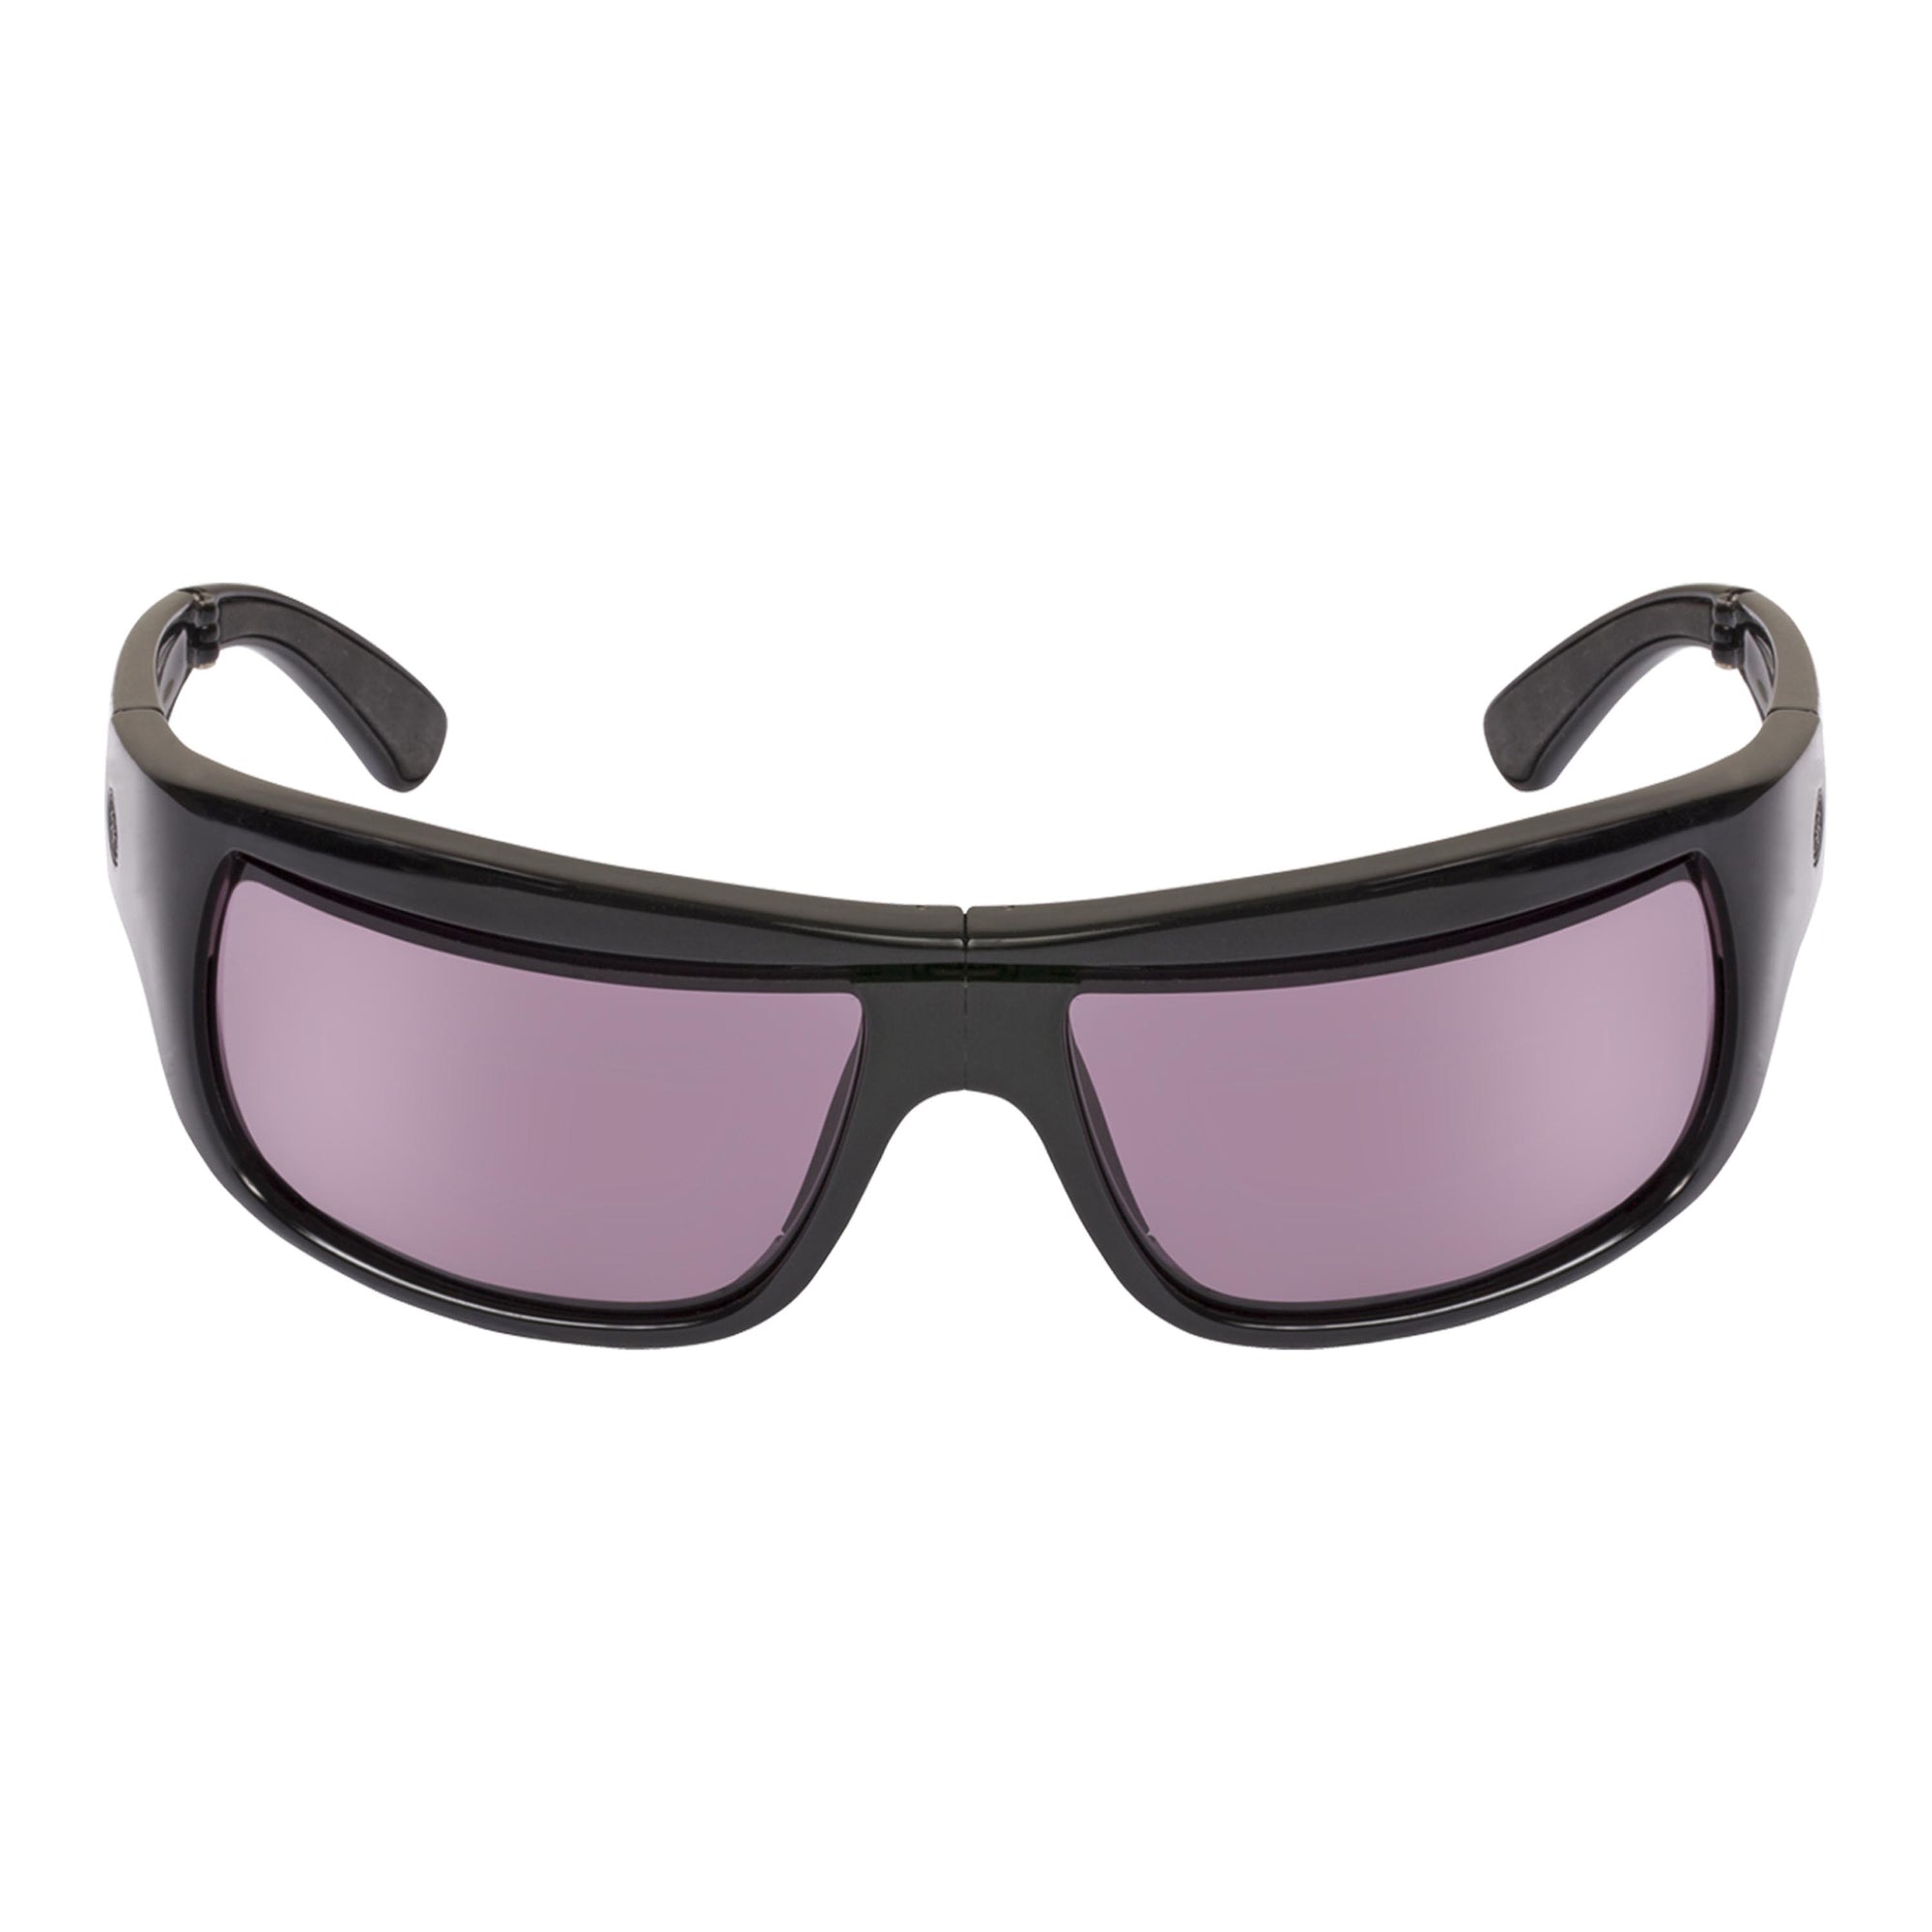 Popticals, Premium Compact Sunglasses, PopH2O, 200070-BGVS, Polarized Sunglasses, Gloss Black Frame, Violet Golf Lenses, Front View